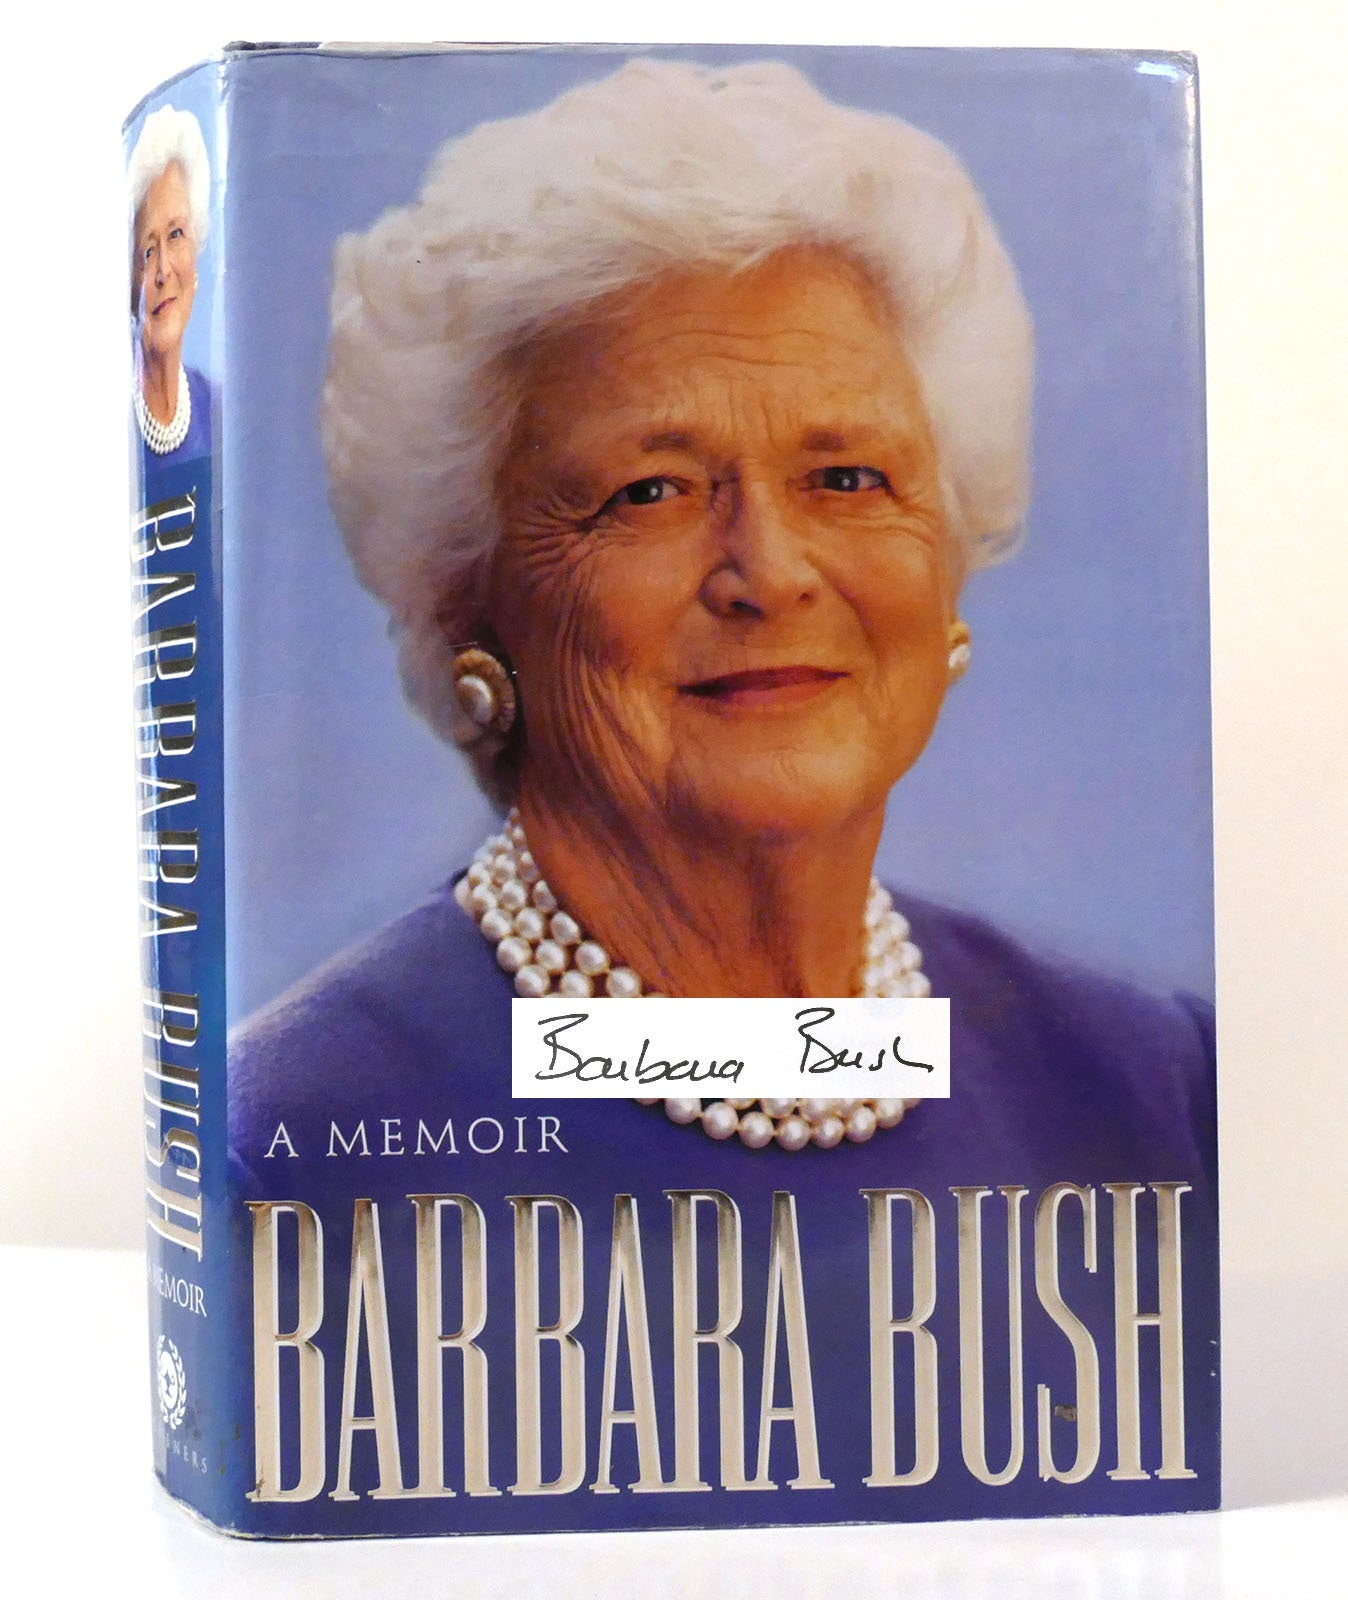 Barbara Bush A Memoir Signed Barbara Bush First Edition First Printing